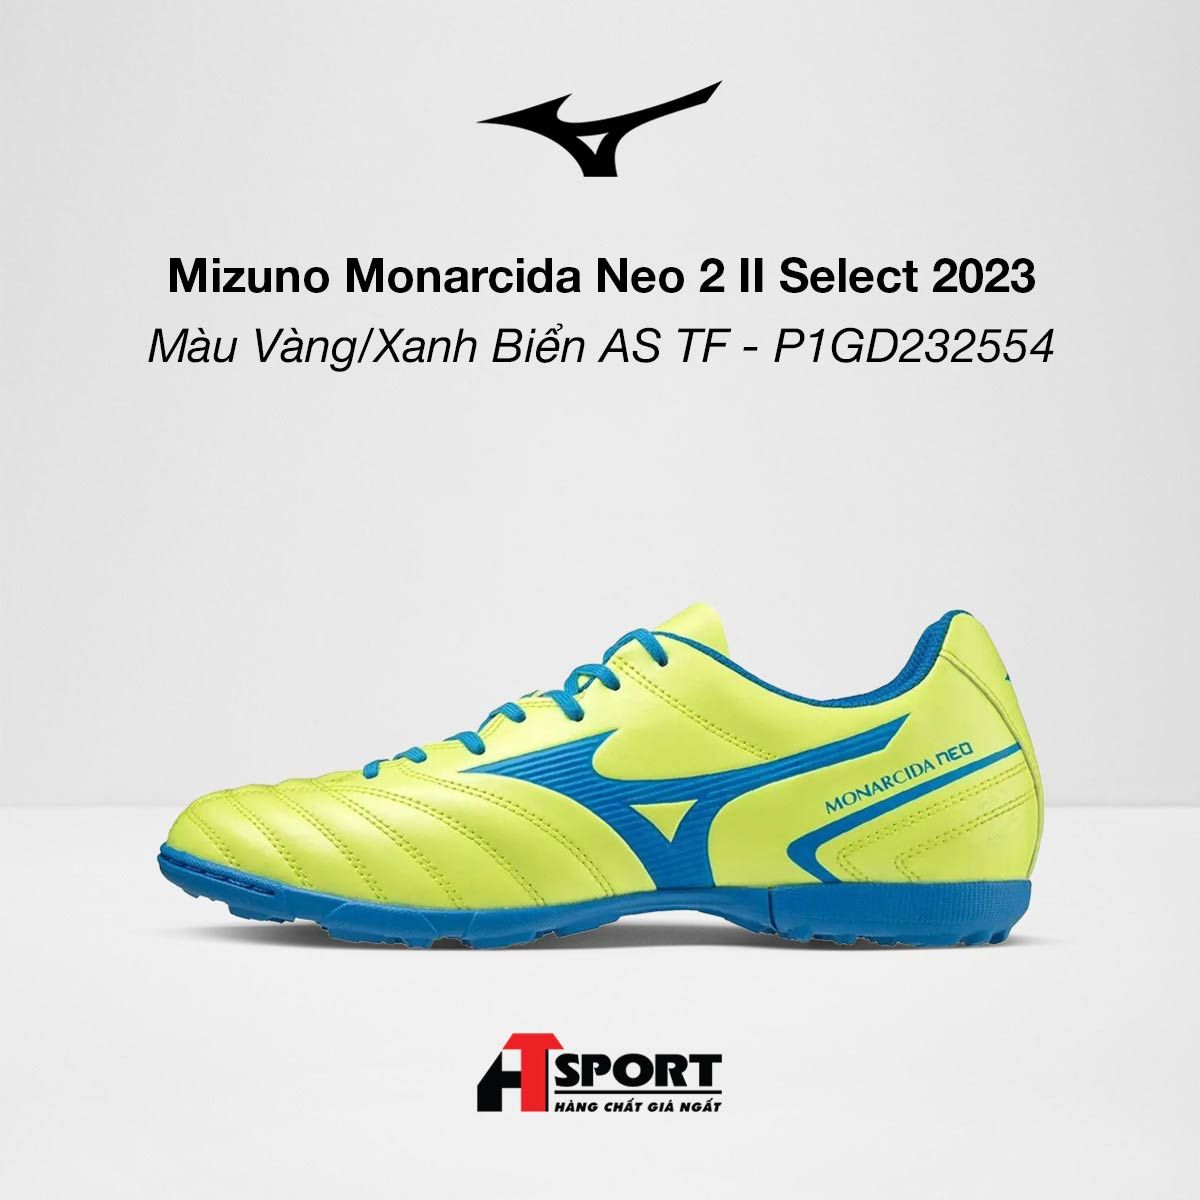  Mizuno Monarcida Neo II Select Màu Vàng/Xanh Biển AS TF - P1GD232554 